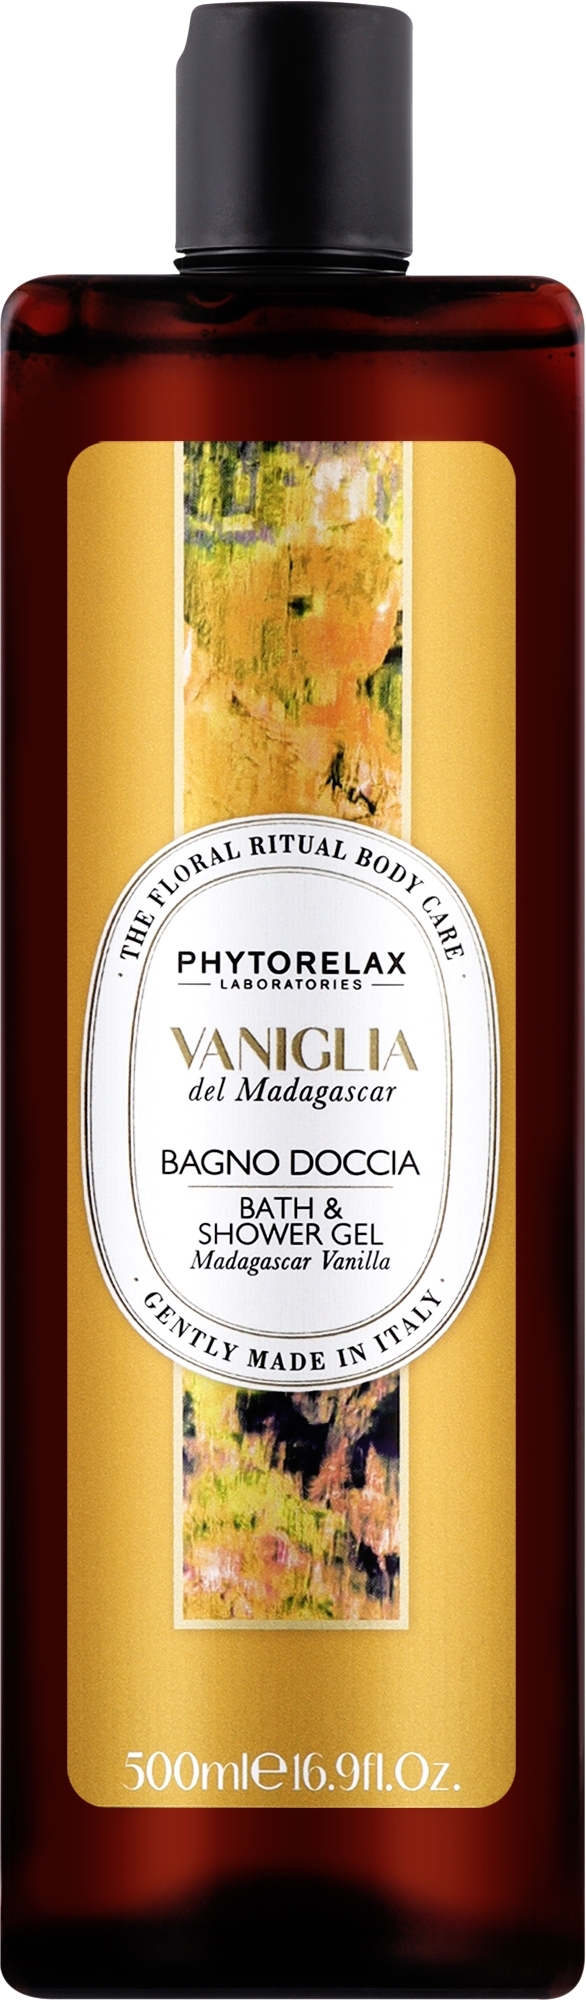 Bath & Shower Gel 'Madagascar Vanilla' - Phytorelax Laboratories Floral Ritual Bath & Shower Gel — photo 500 ml